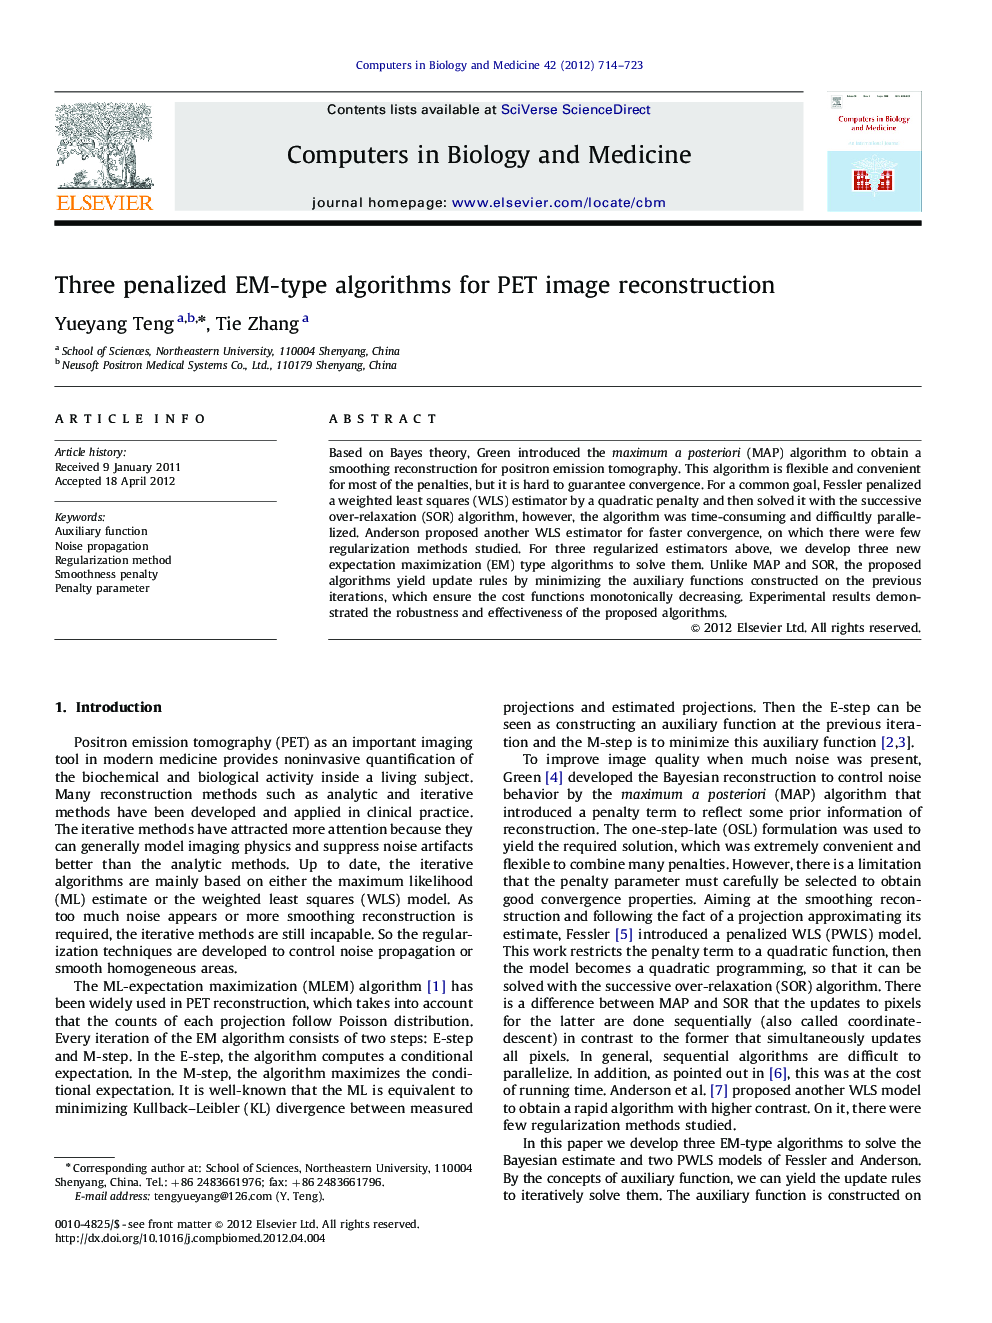 Three penalized EM-type algorithms for PET image reconstruction